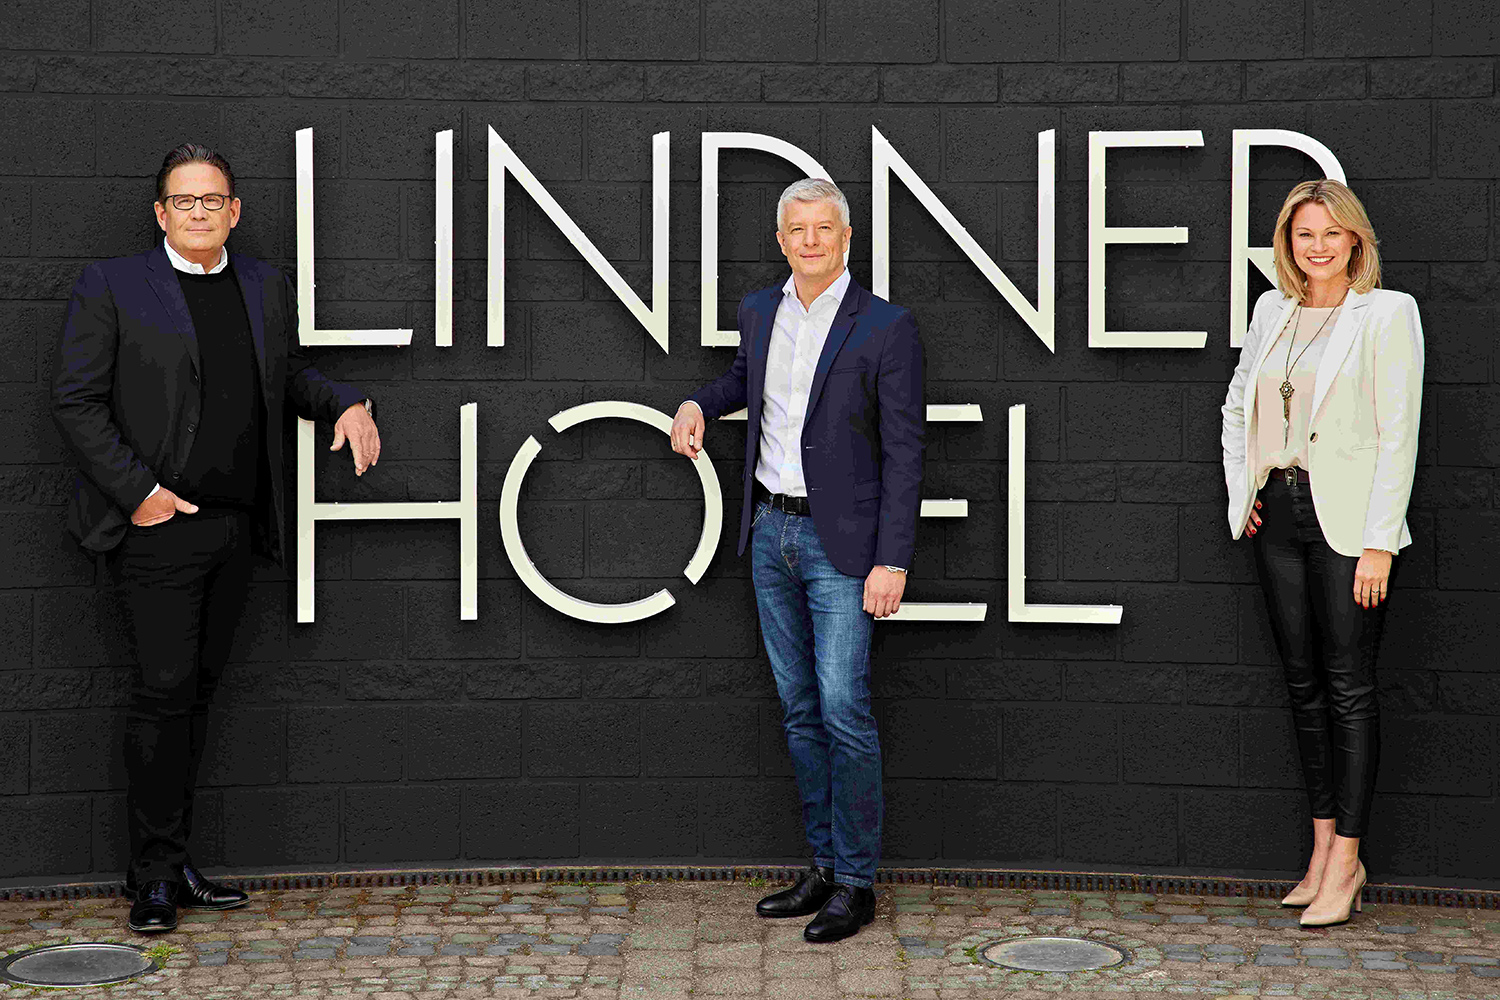 Frank Lindner, Arno Schwalie und Stefanie Brandes © Lindner Hotels AG